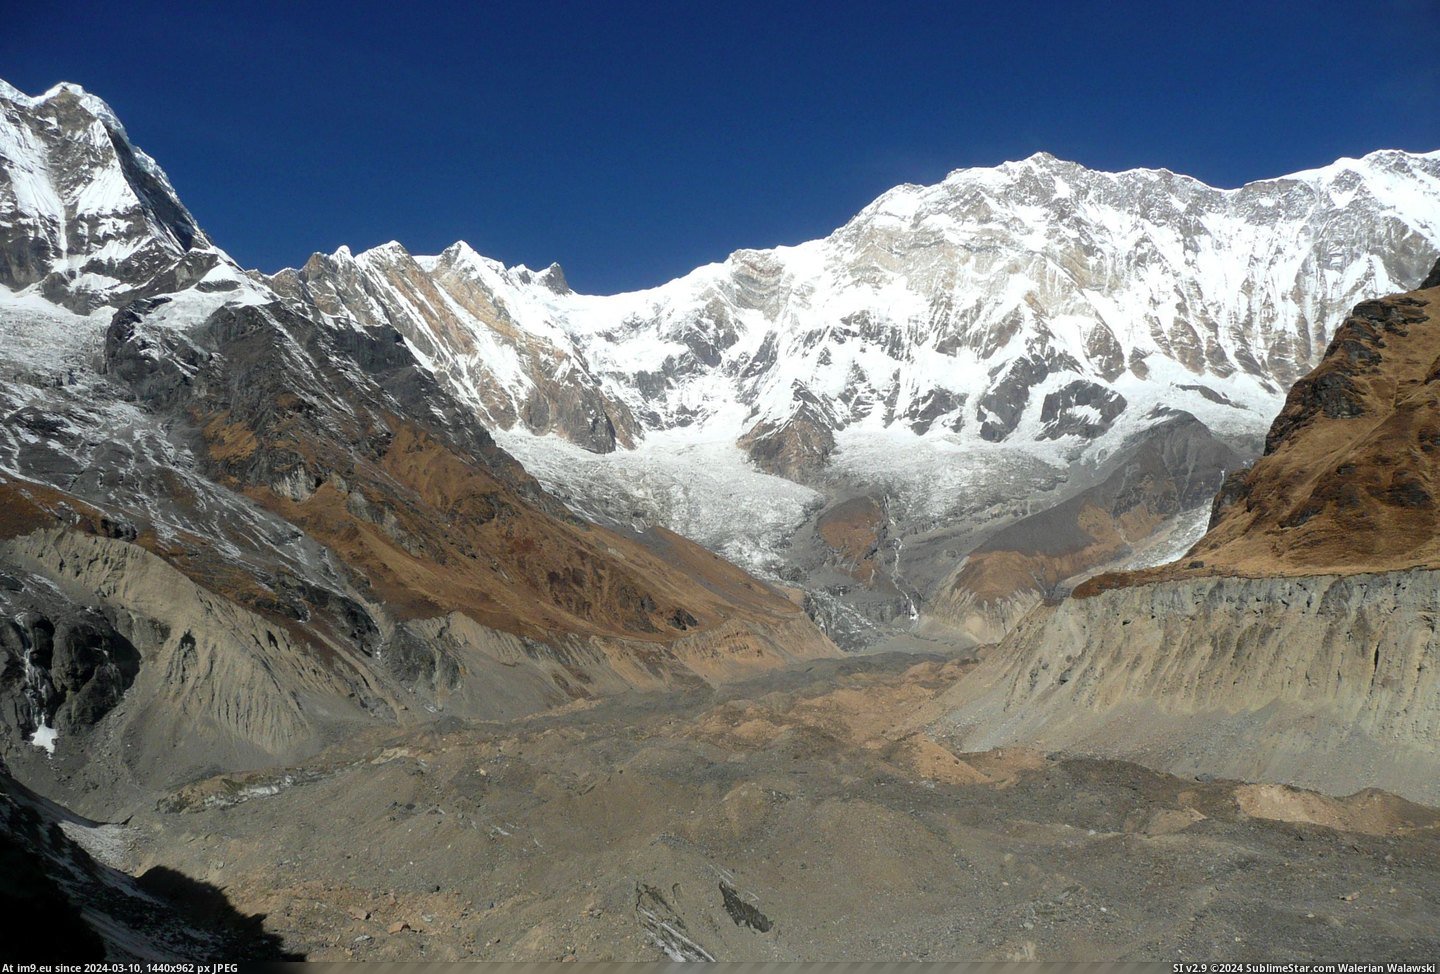 #Glacier #Covered #Nepal #Landslides #Wasn #Disappointed [Earthporn] The Landslides covered the Glacier, still wasn't Disappointed - Nepal (2764X1859) Pic. (Bild von album My r/EARTHPORN favs))